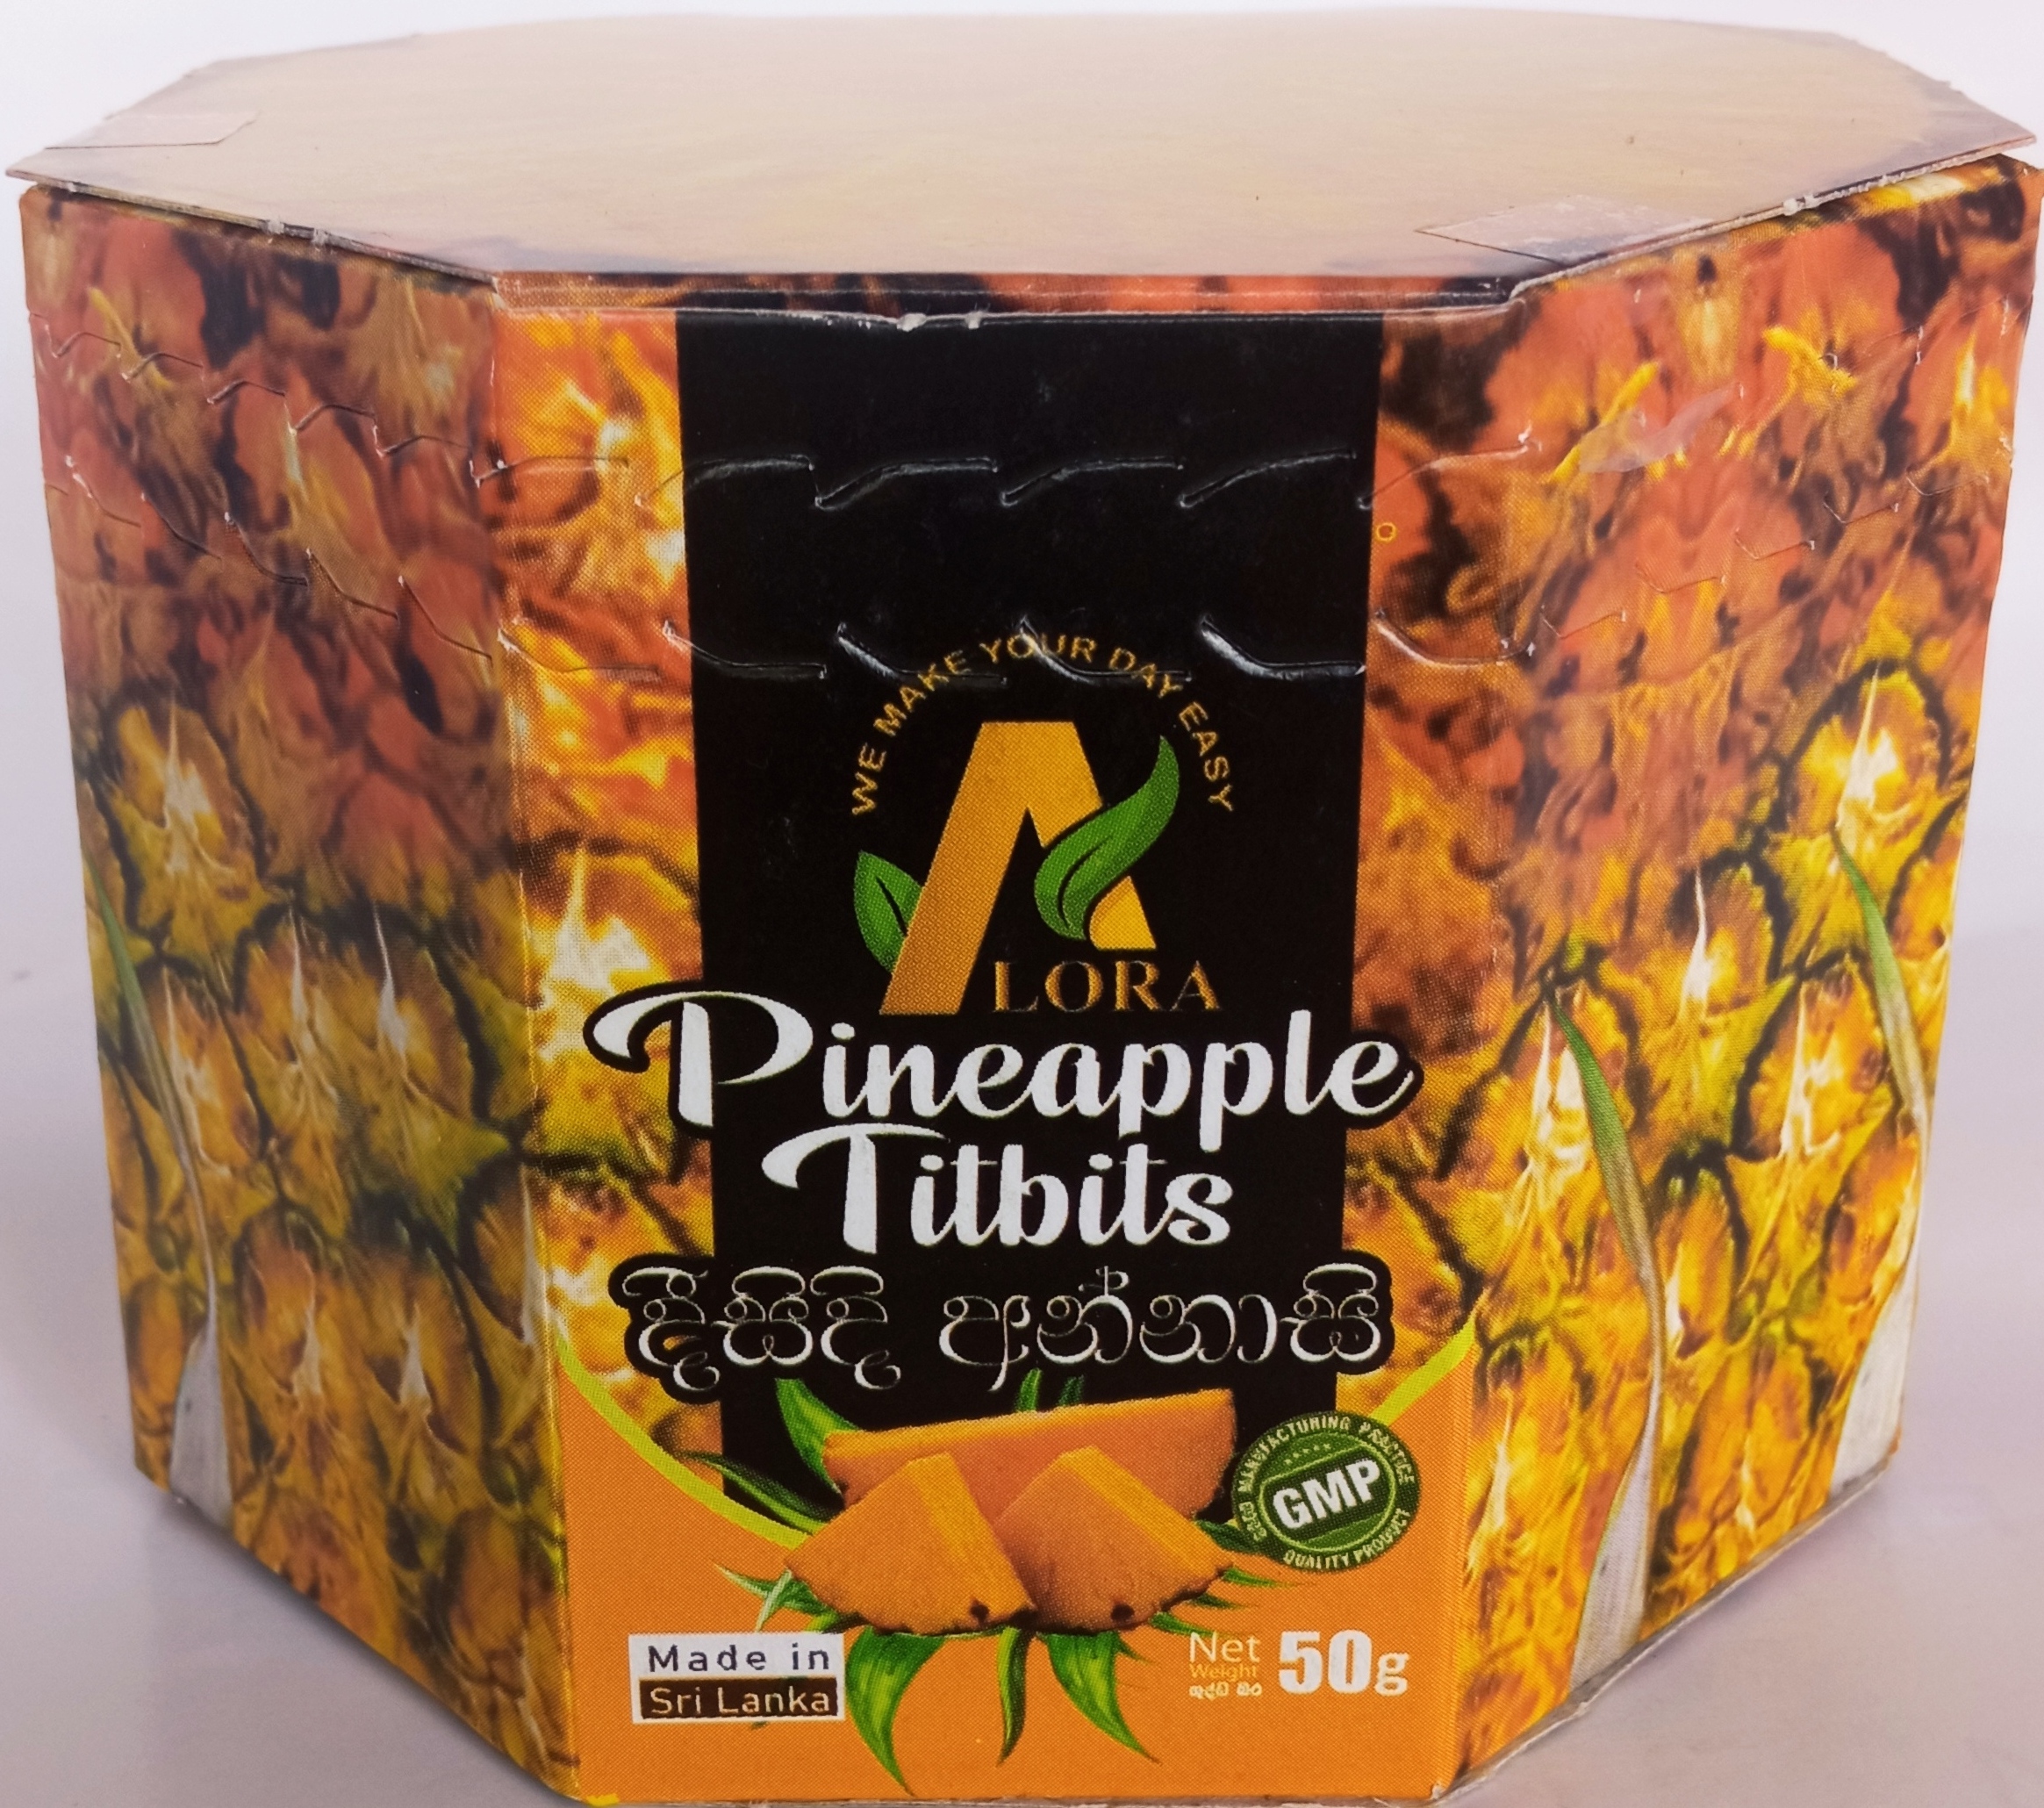 Pineapple titbits